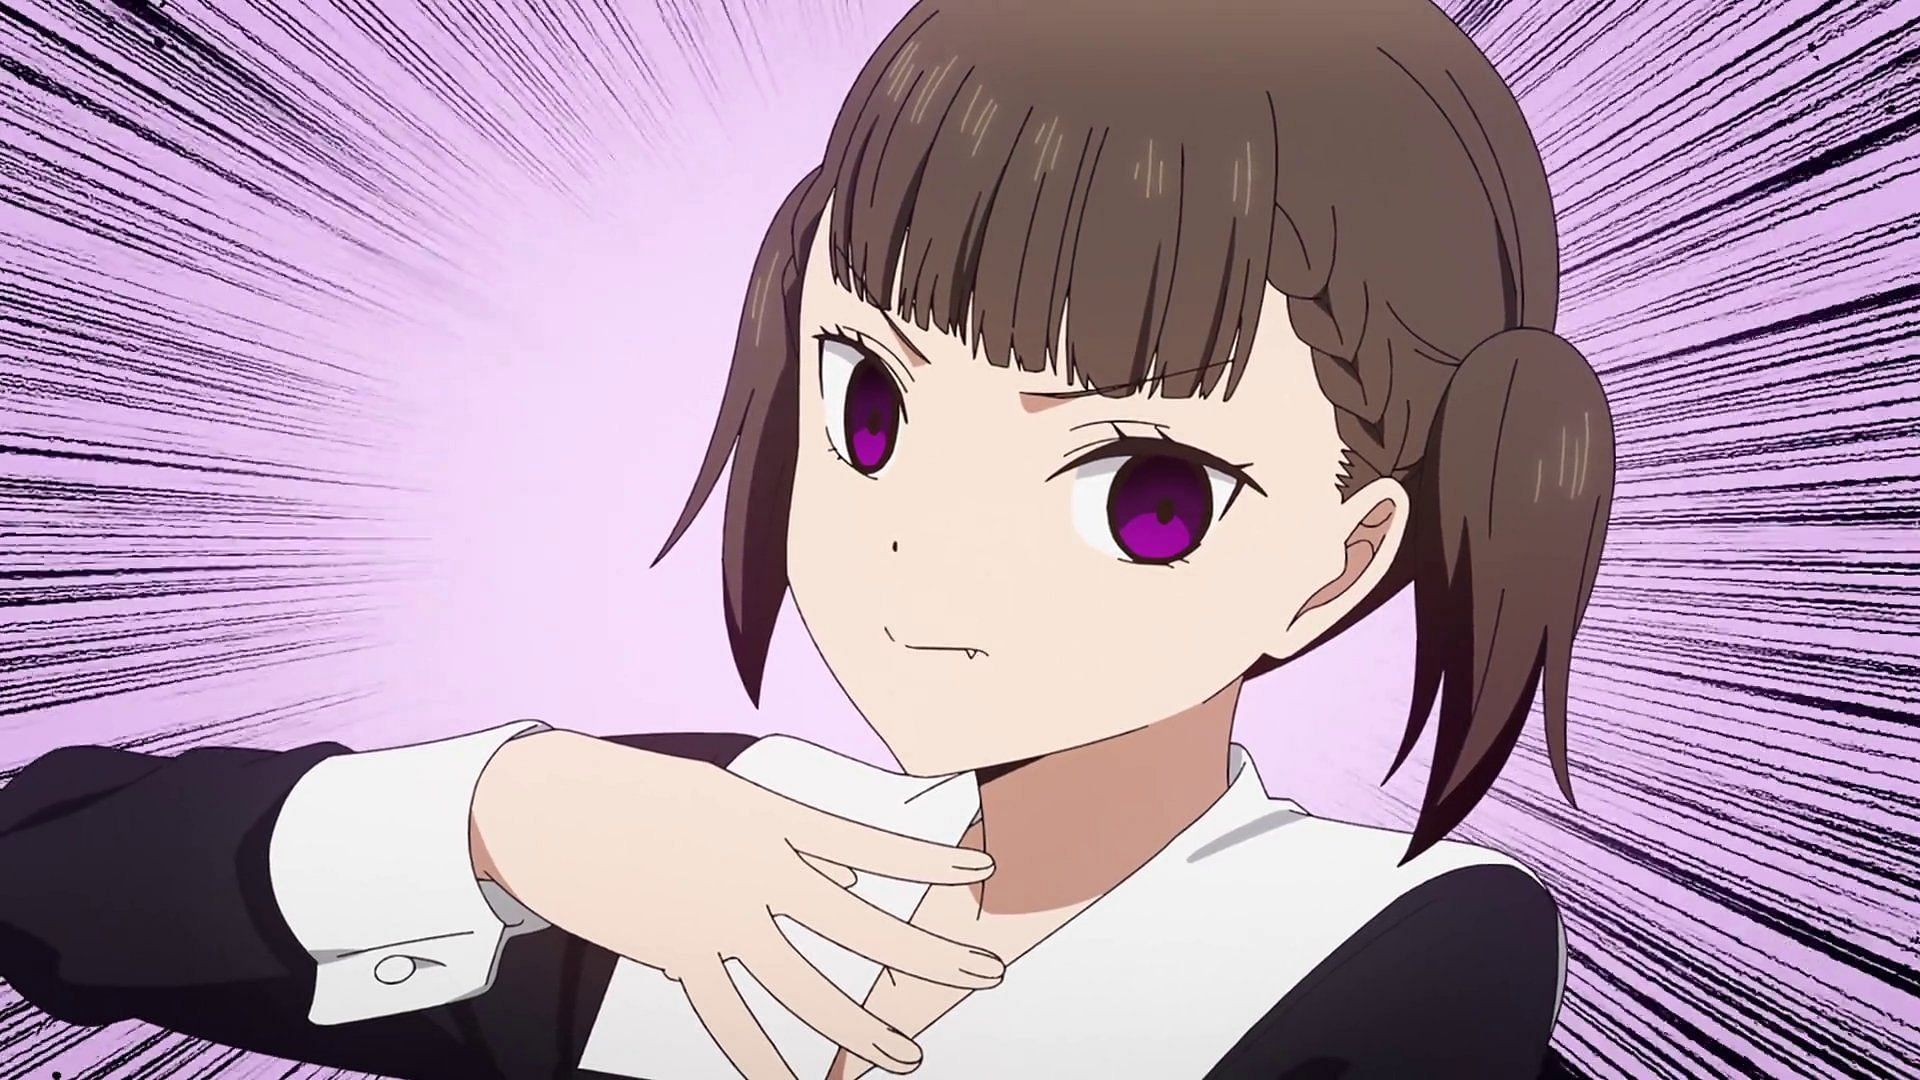 Kaguya-sama: Love is War Season 3 Reveals Episode 4 Preview - Anime Corner